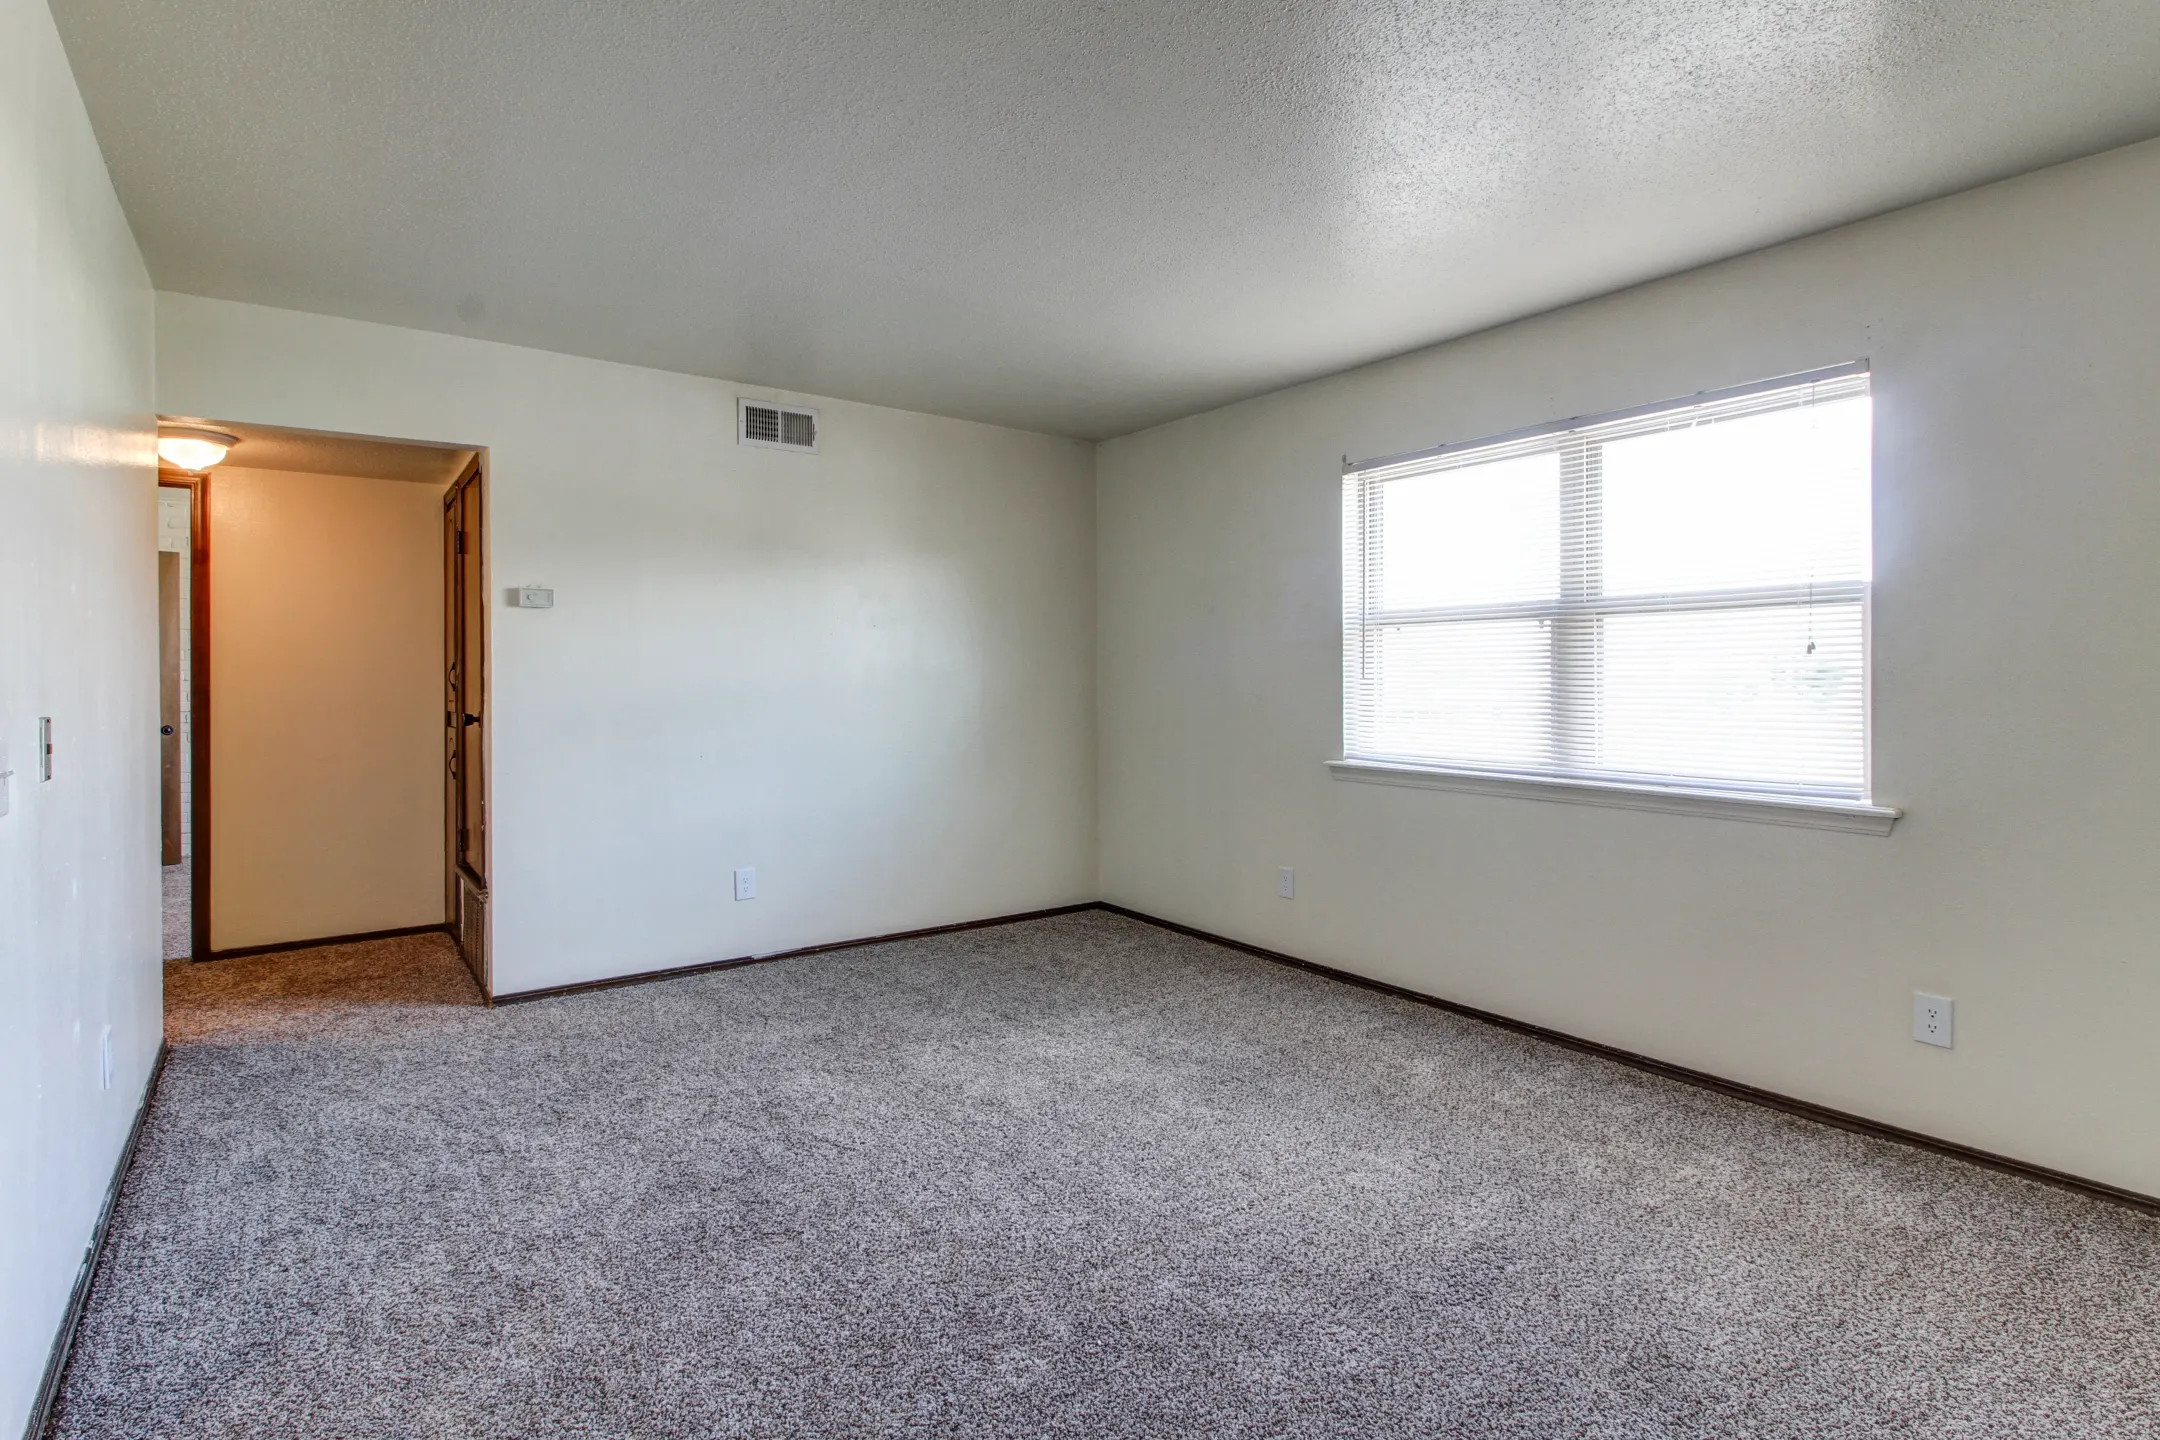 Living Room - Casady Apartments - Oklahoma City, OK